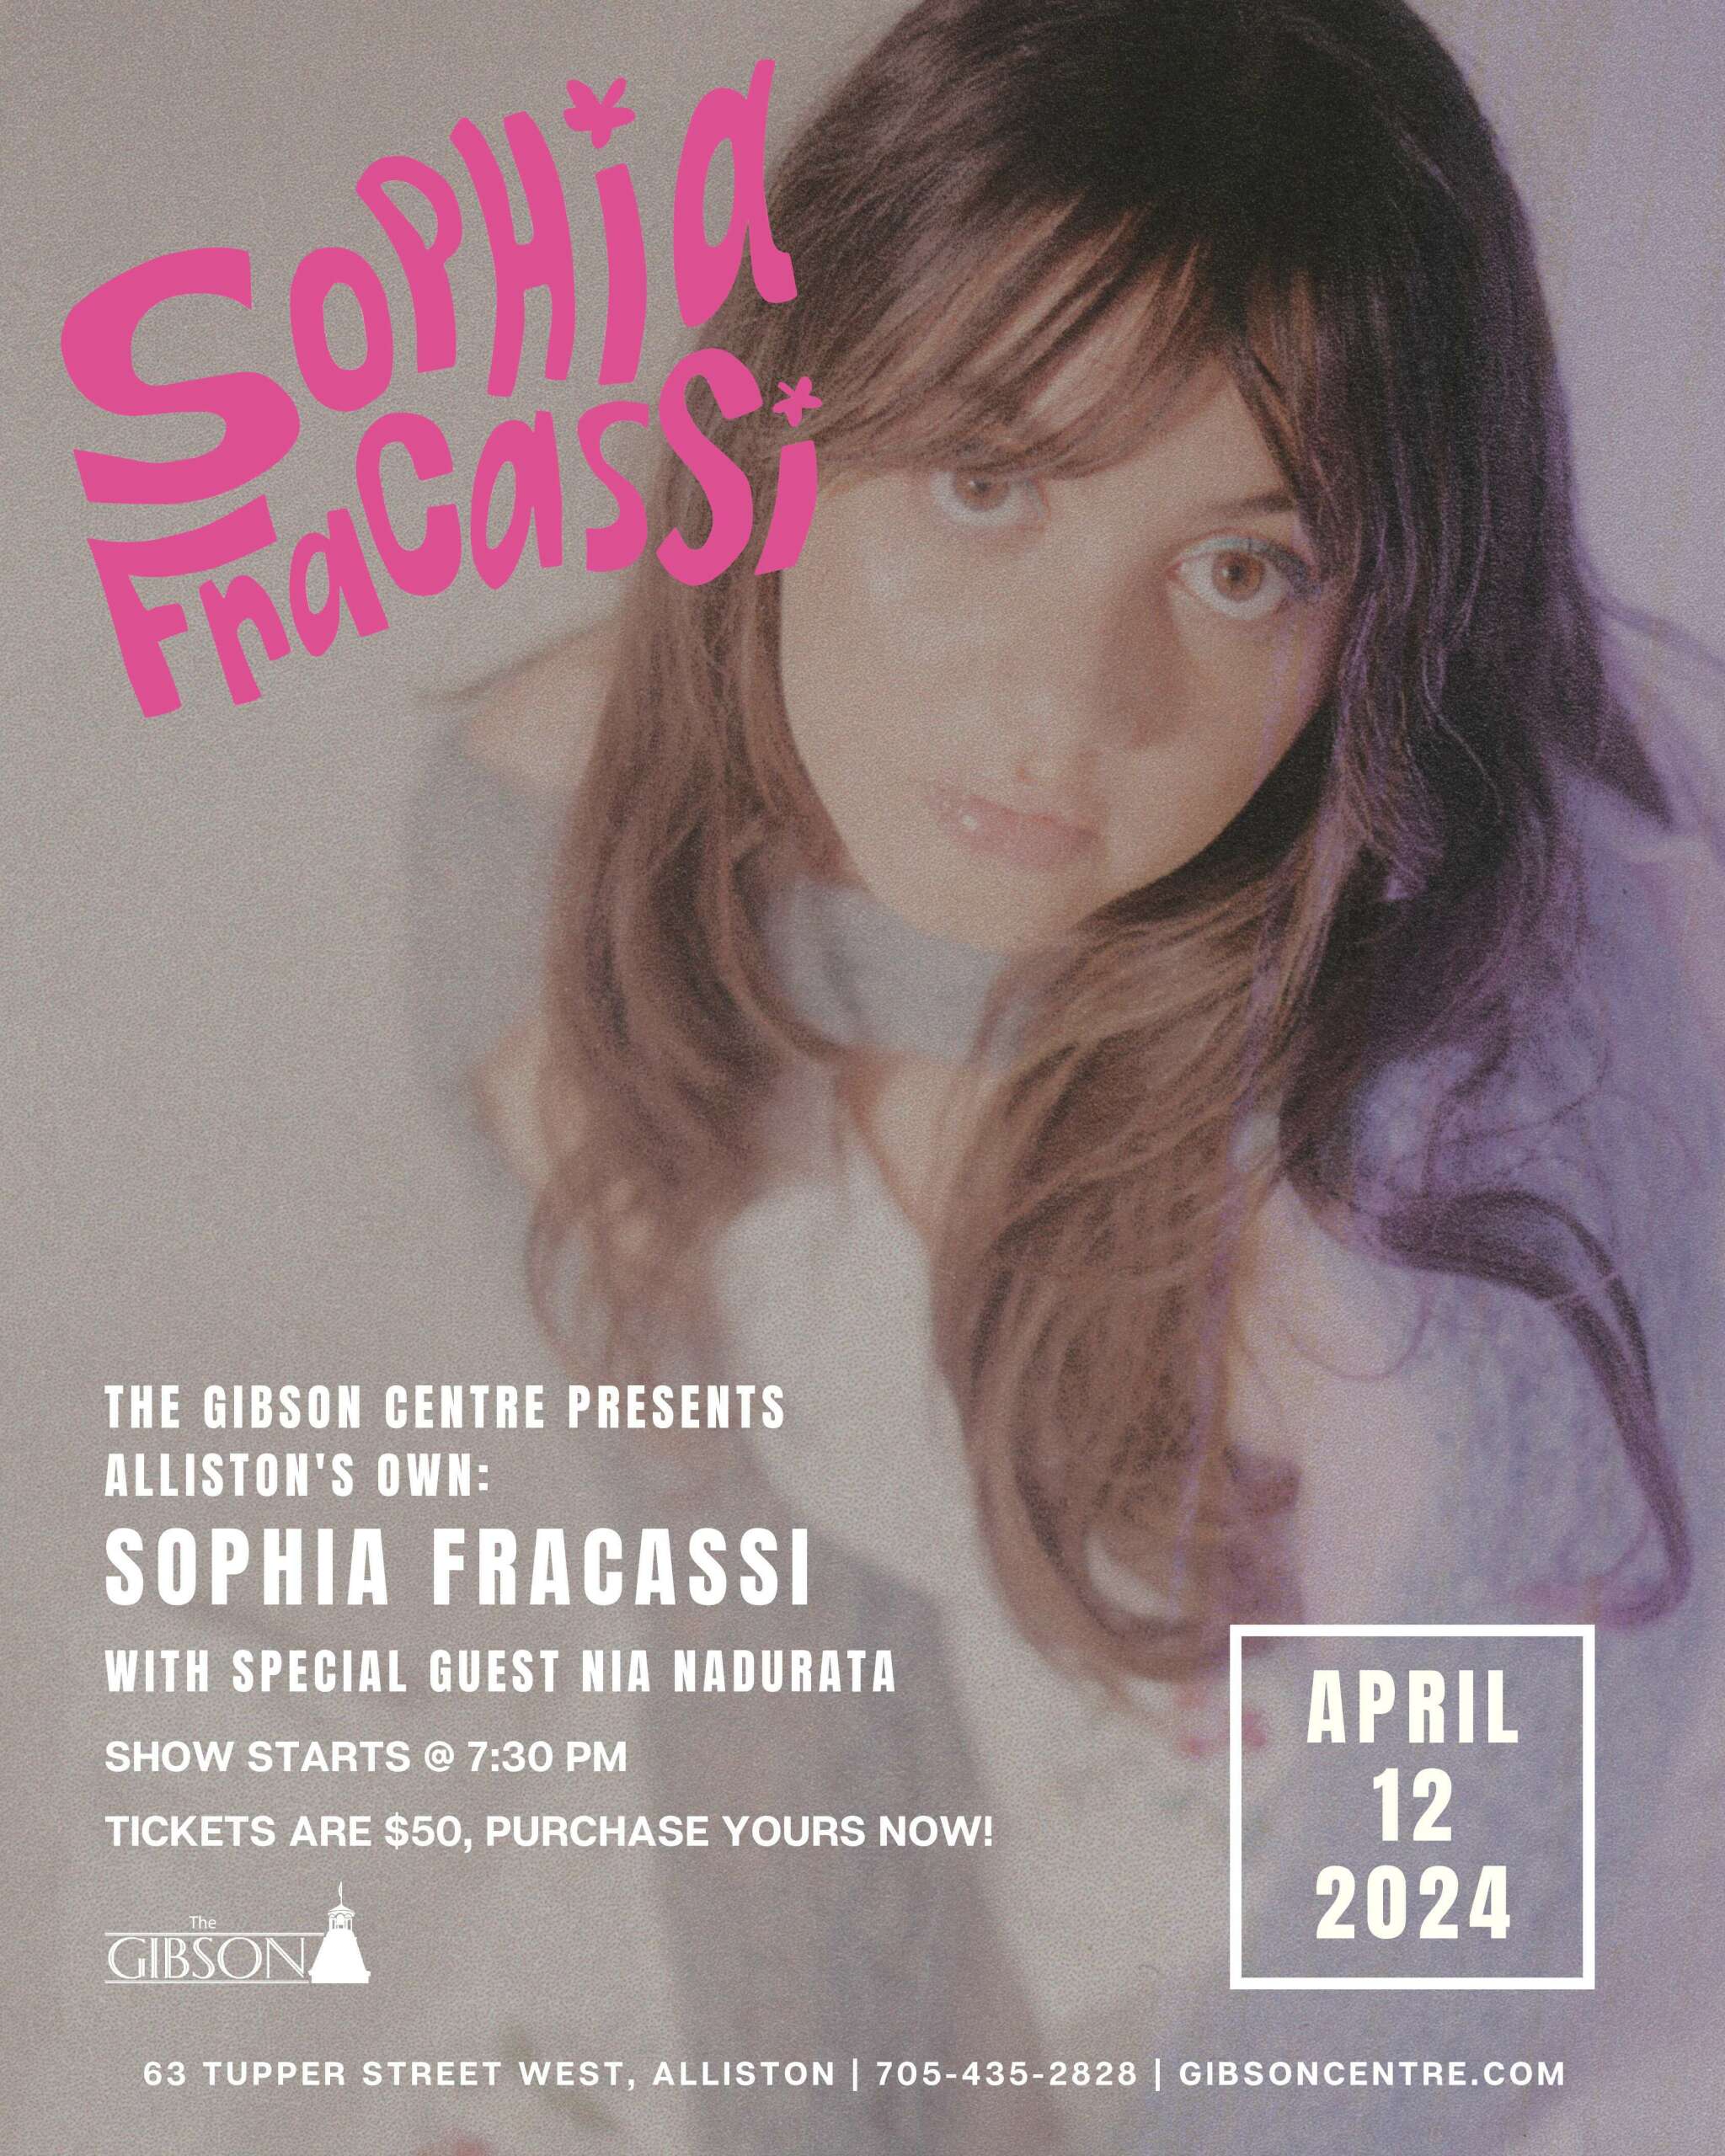 The Gibson Centre presents Sophia Fracassi